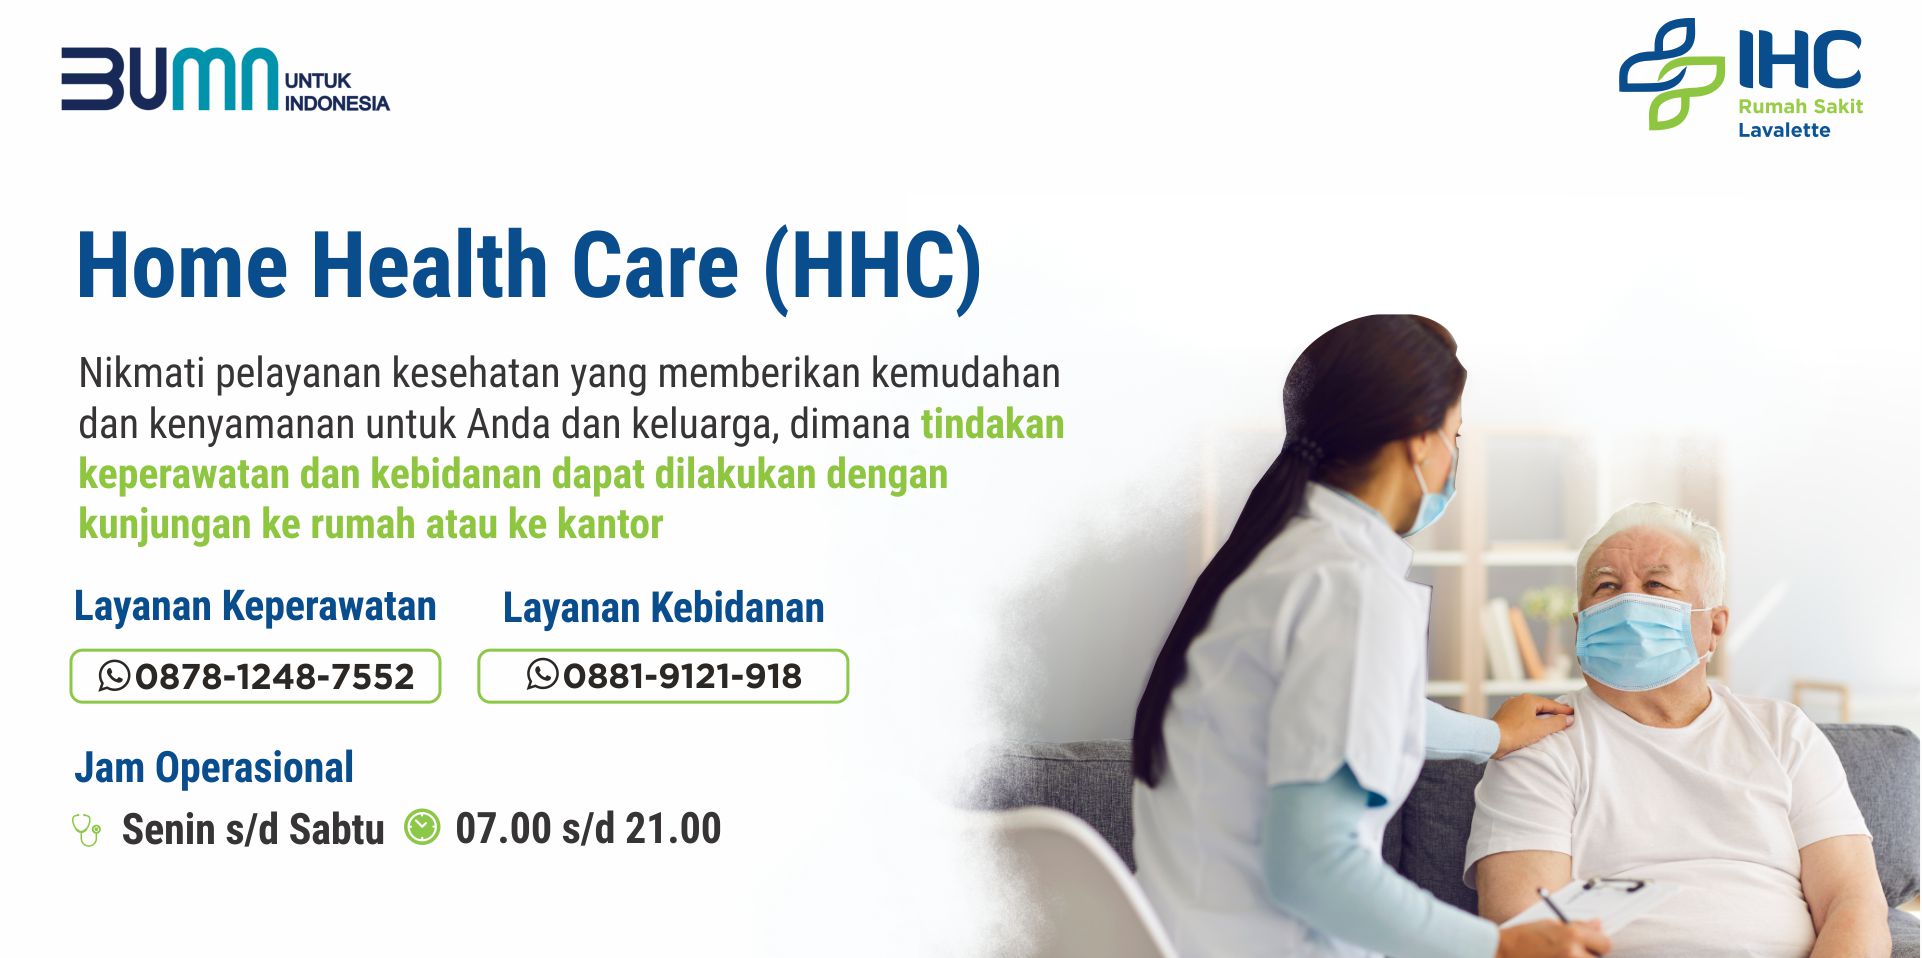 Home Health Care (HHC)